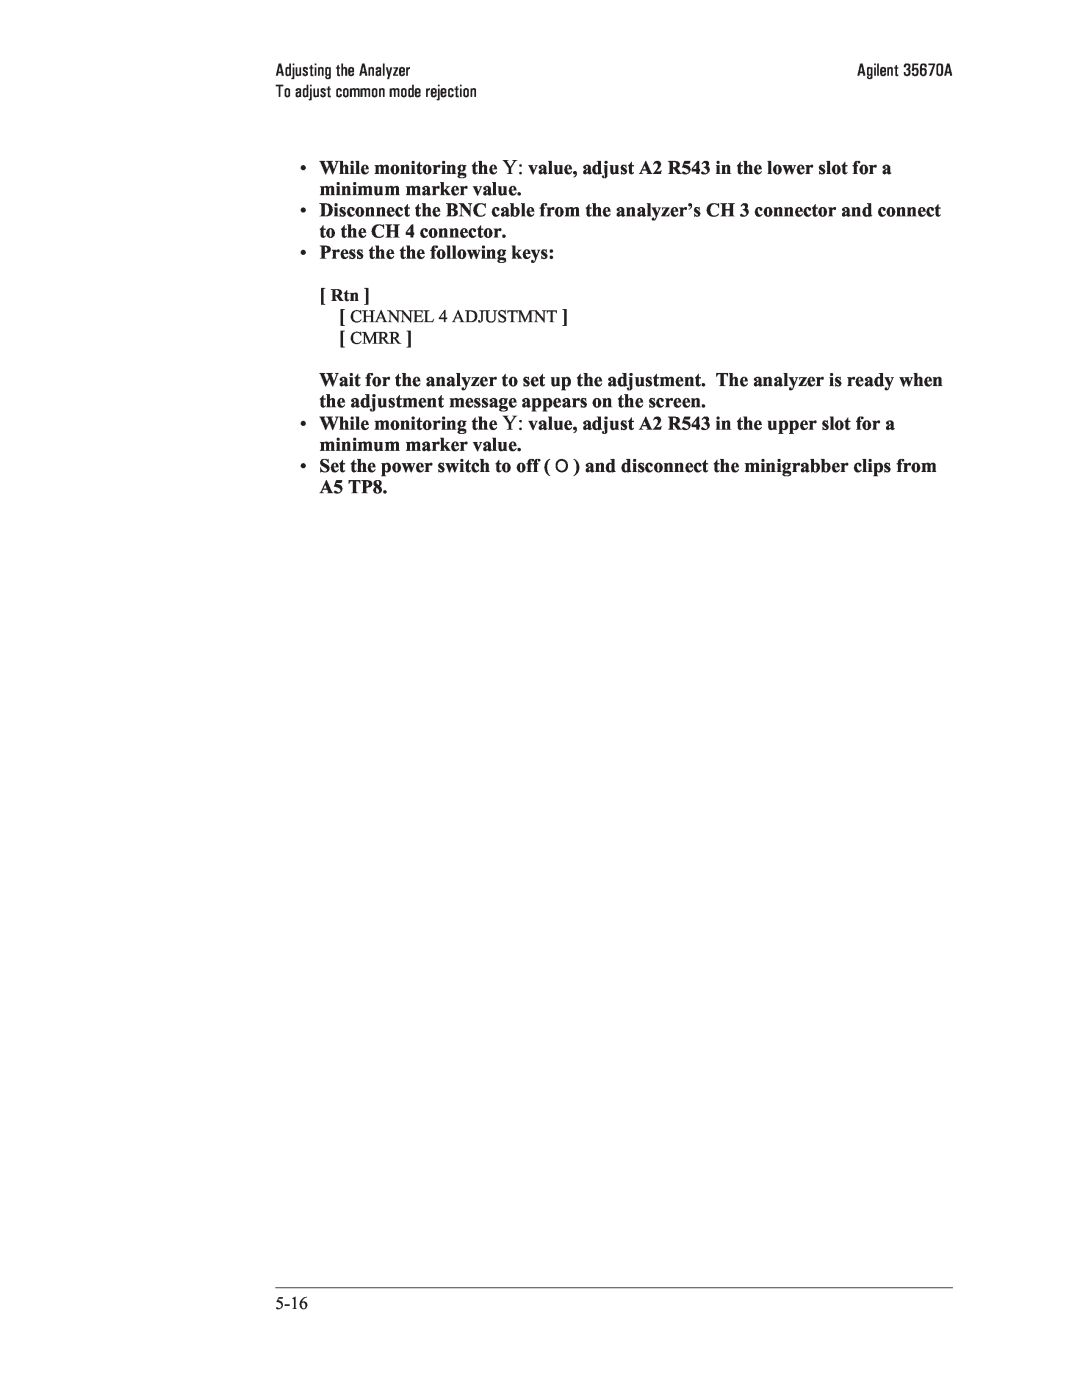 Agilent Technologies 35670-90066 manual •Press the the following keys 